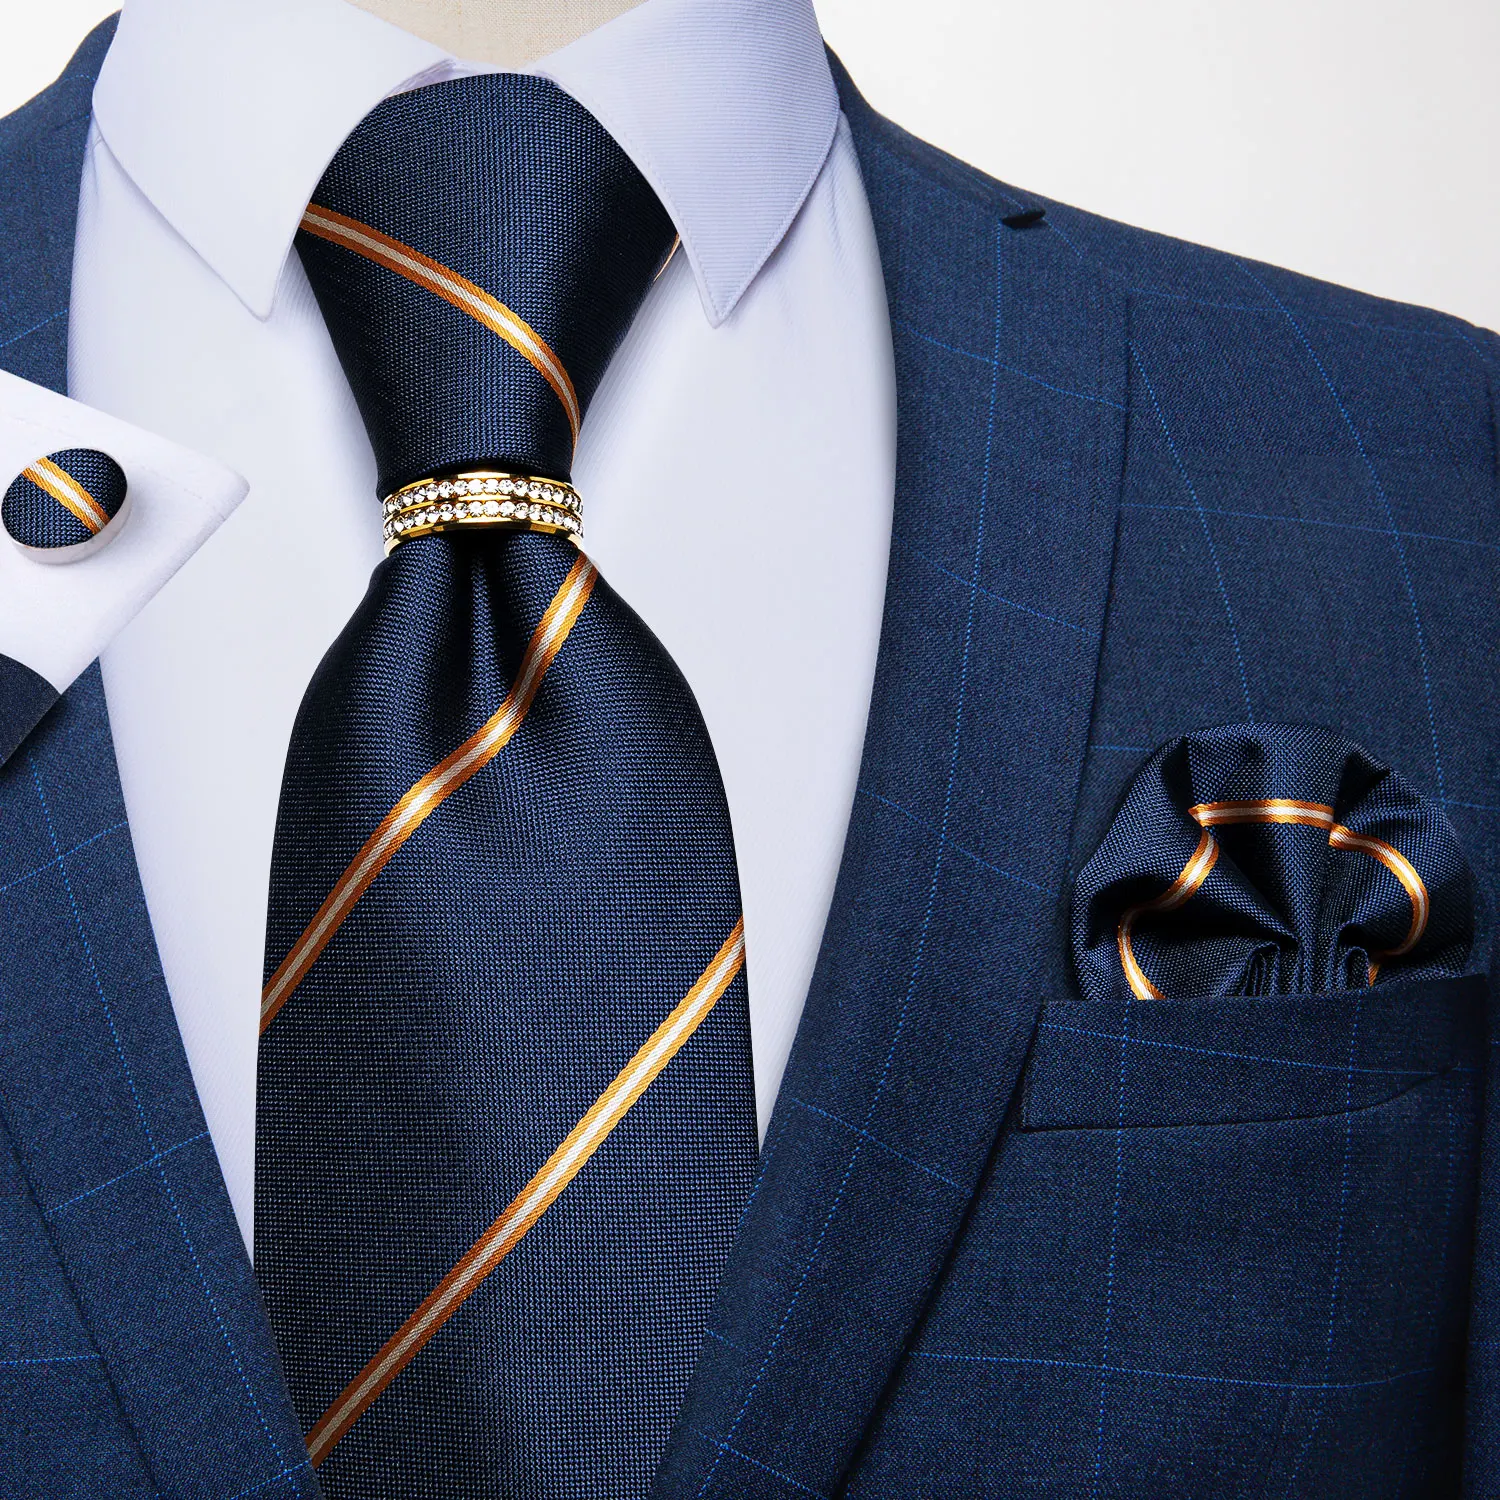 Gold Striped Navy Blue Men's Tie Silk Jacquard Cravat Business Wedding Party Neck Tie Handkerchief Tie Ring Gift For Men DiBanGu